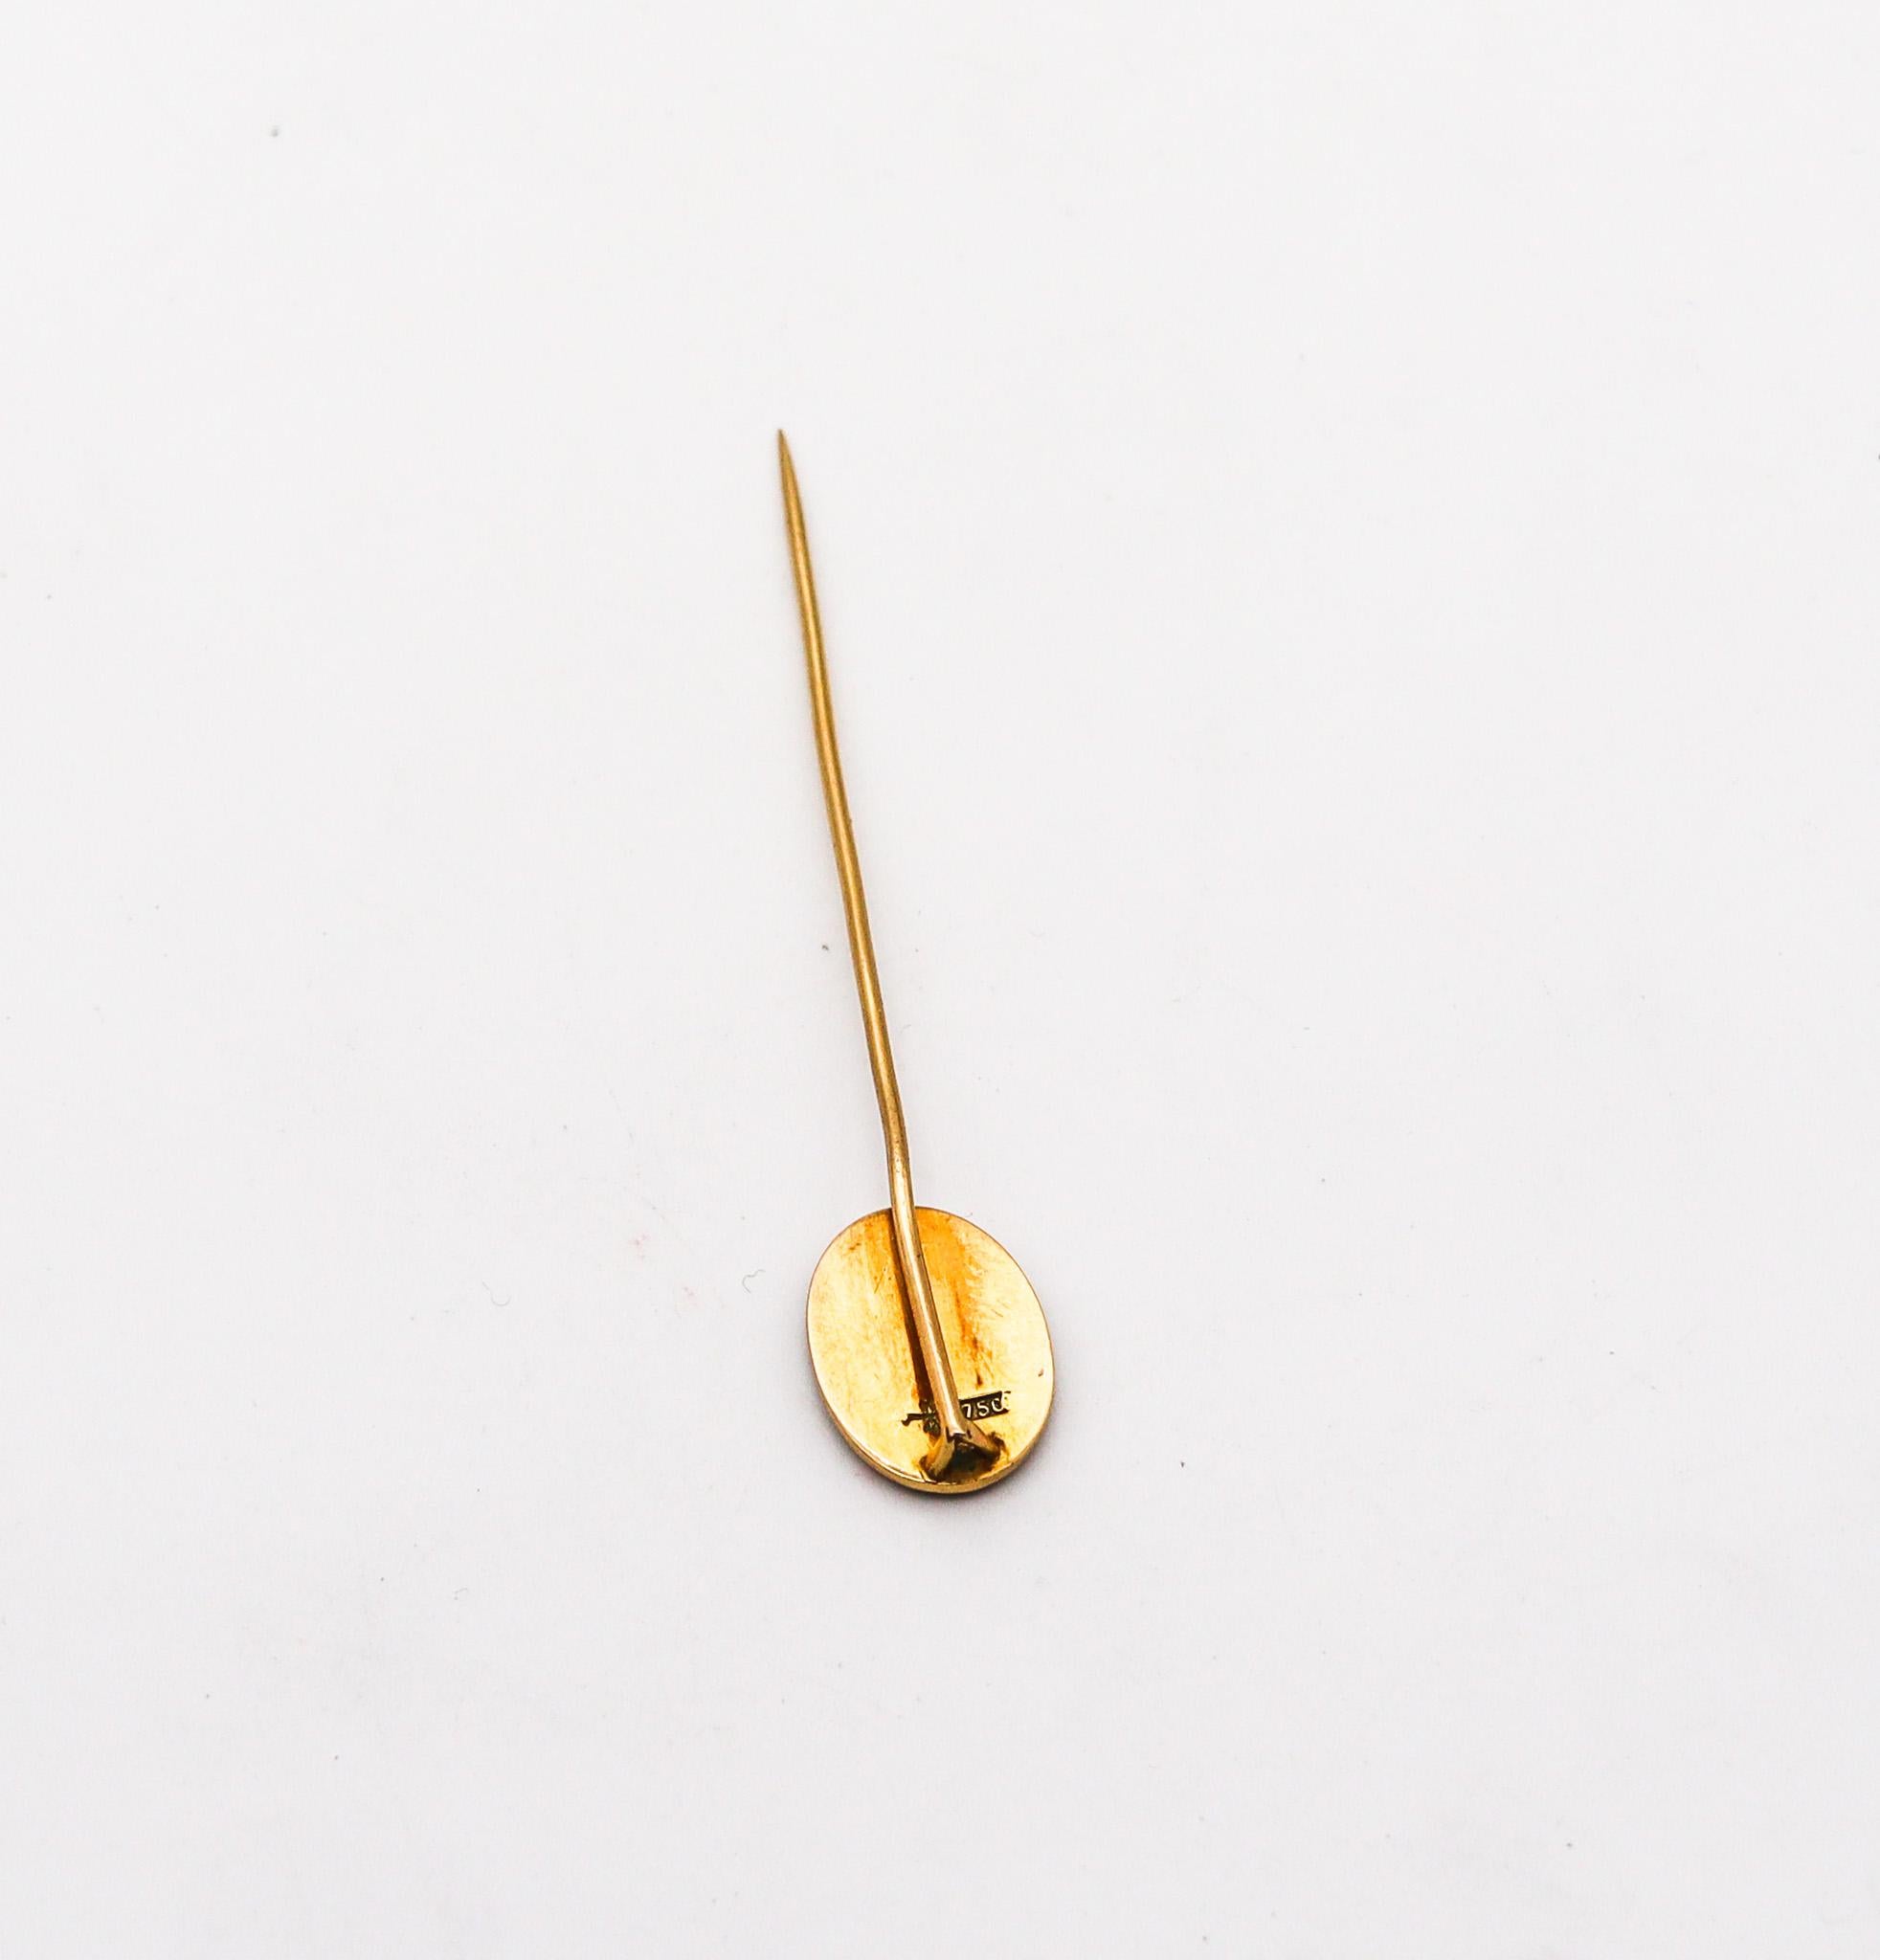 Meyle & Mayer 1900 Art Nouveau Guilloche Enamel Stick Pin In 18Kt Yellow Gold For Sale 1